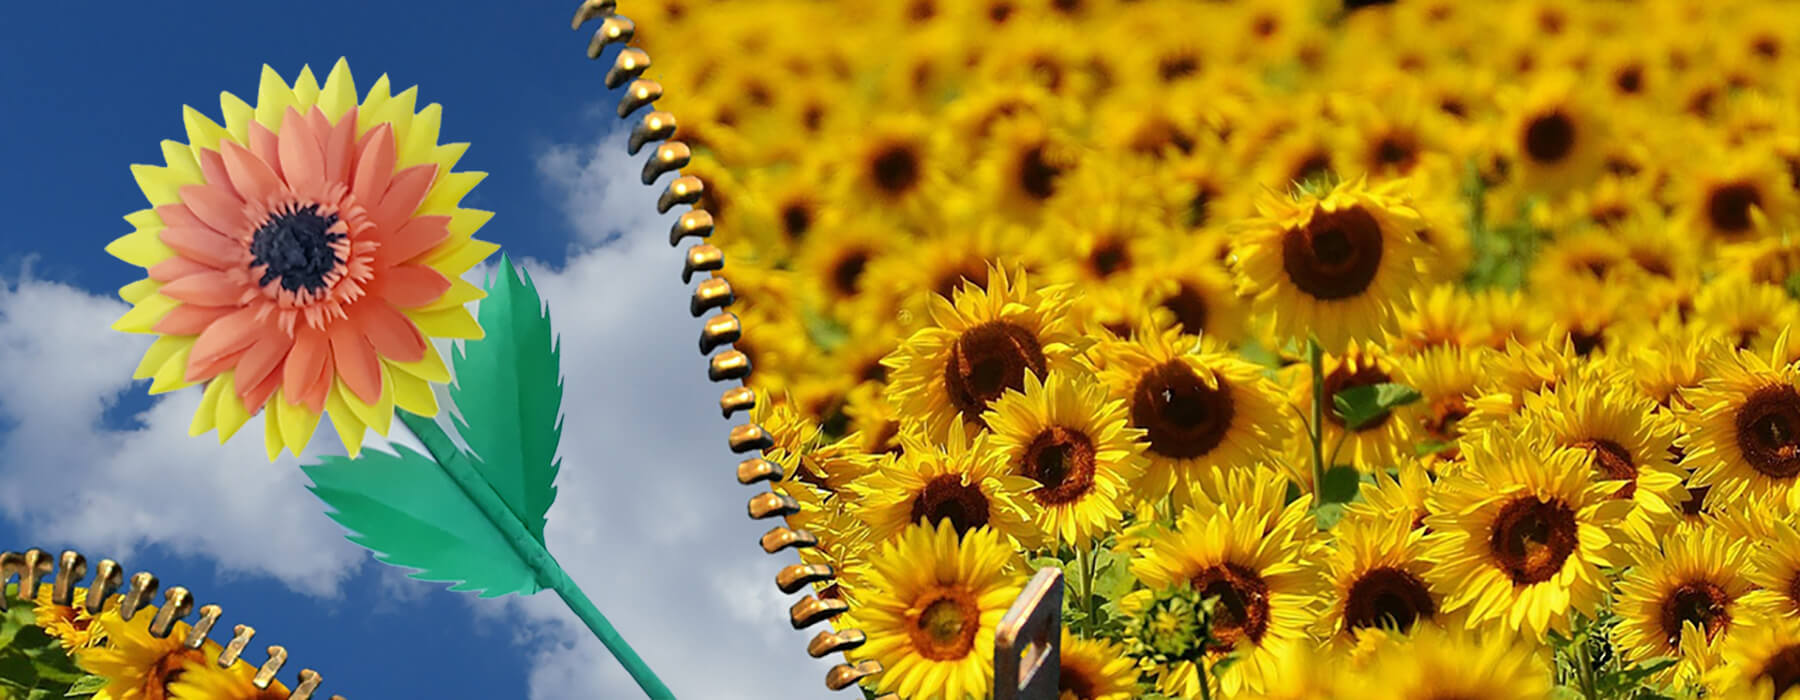 SunflowerStalk.com Make Your Own Origami Sunflower